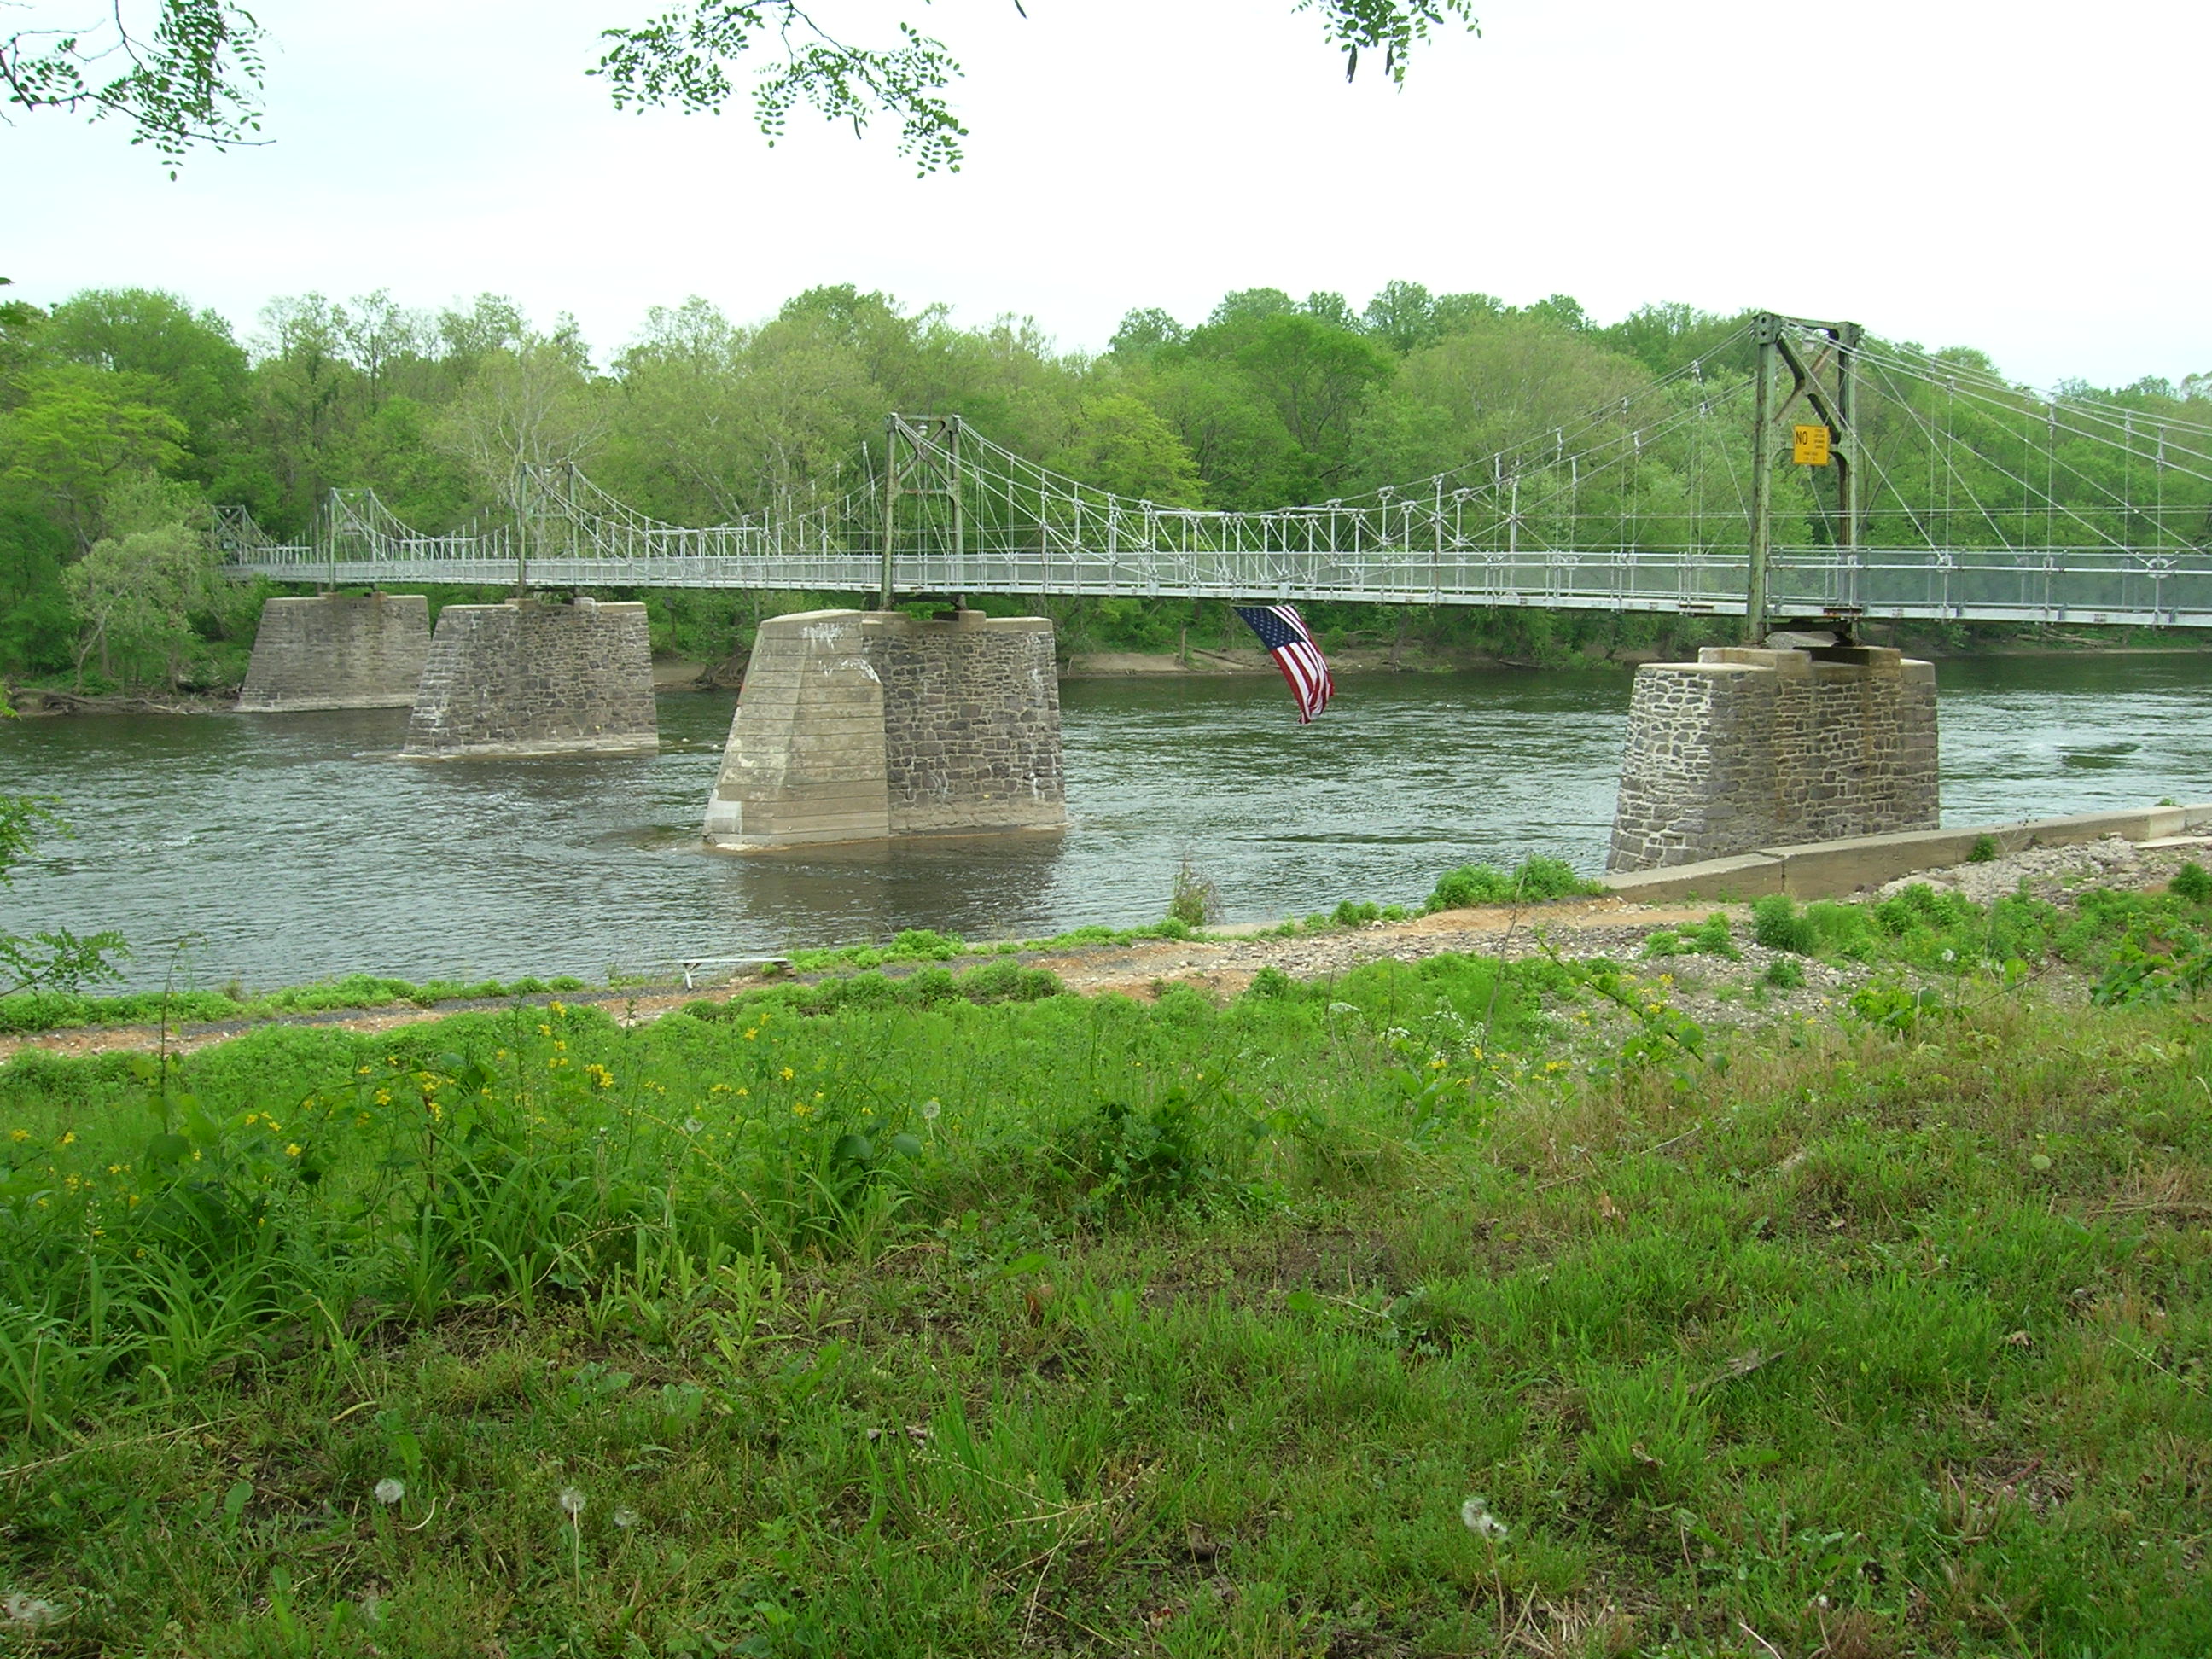 An old stone-pier bridge over a river